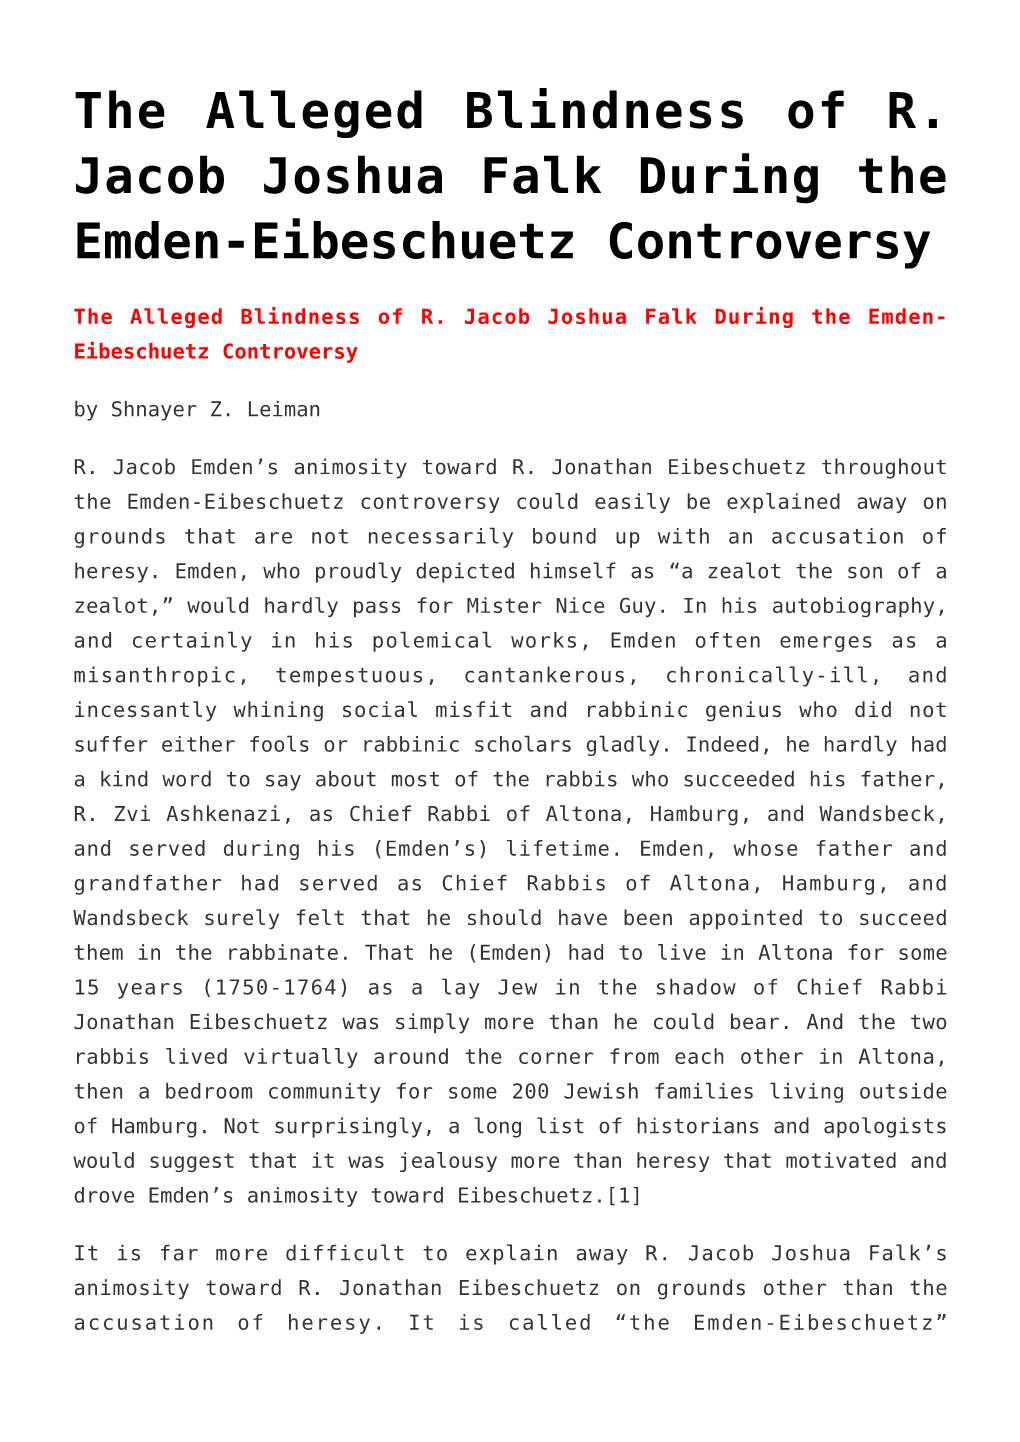 The Alleged Blindness of R. Jacob Joshua Falk During the Emden-Eibeschuetz Controversy